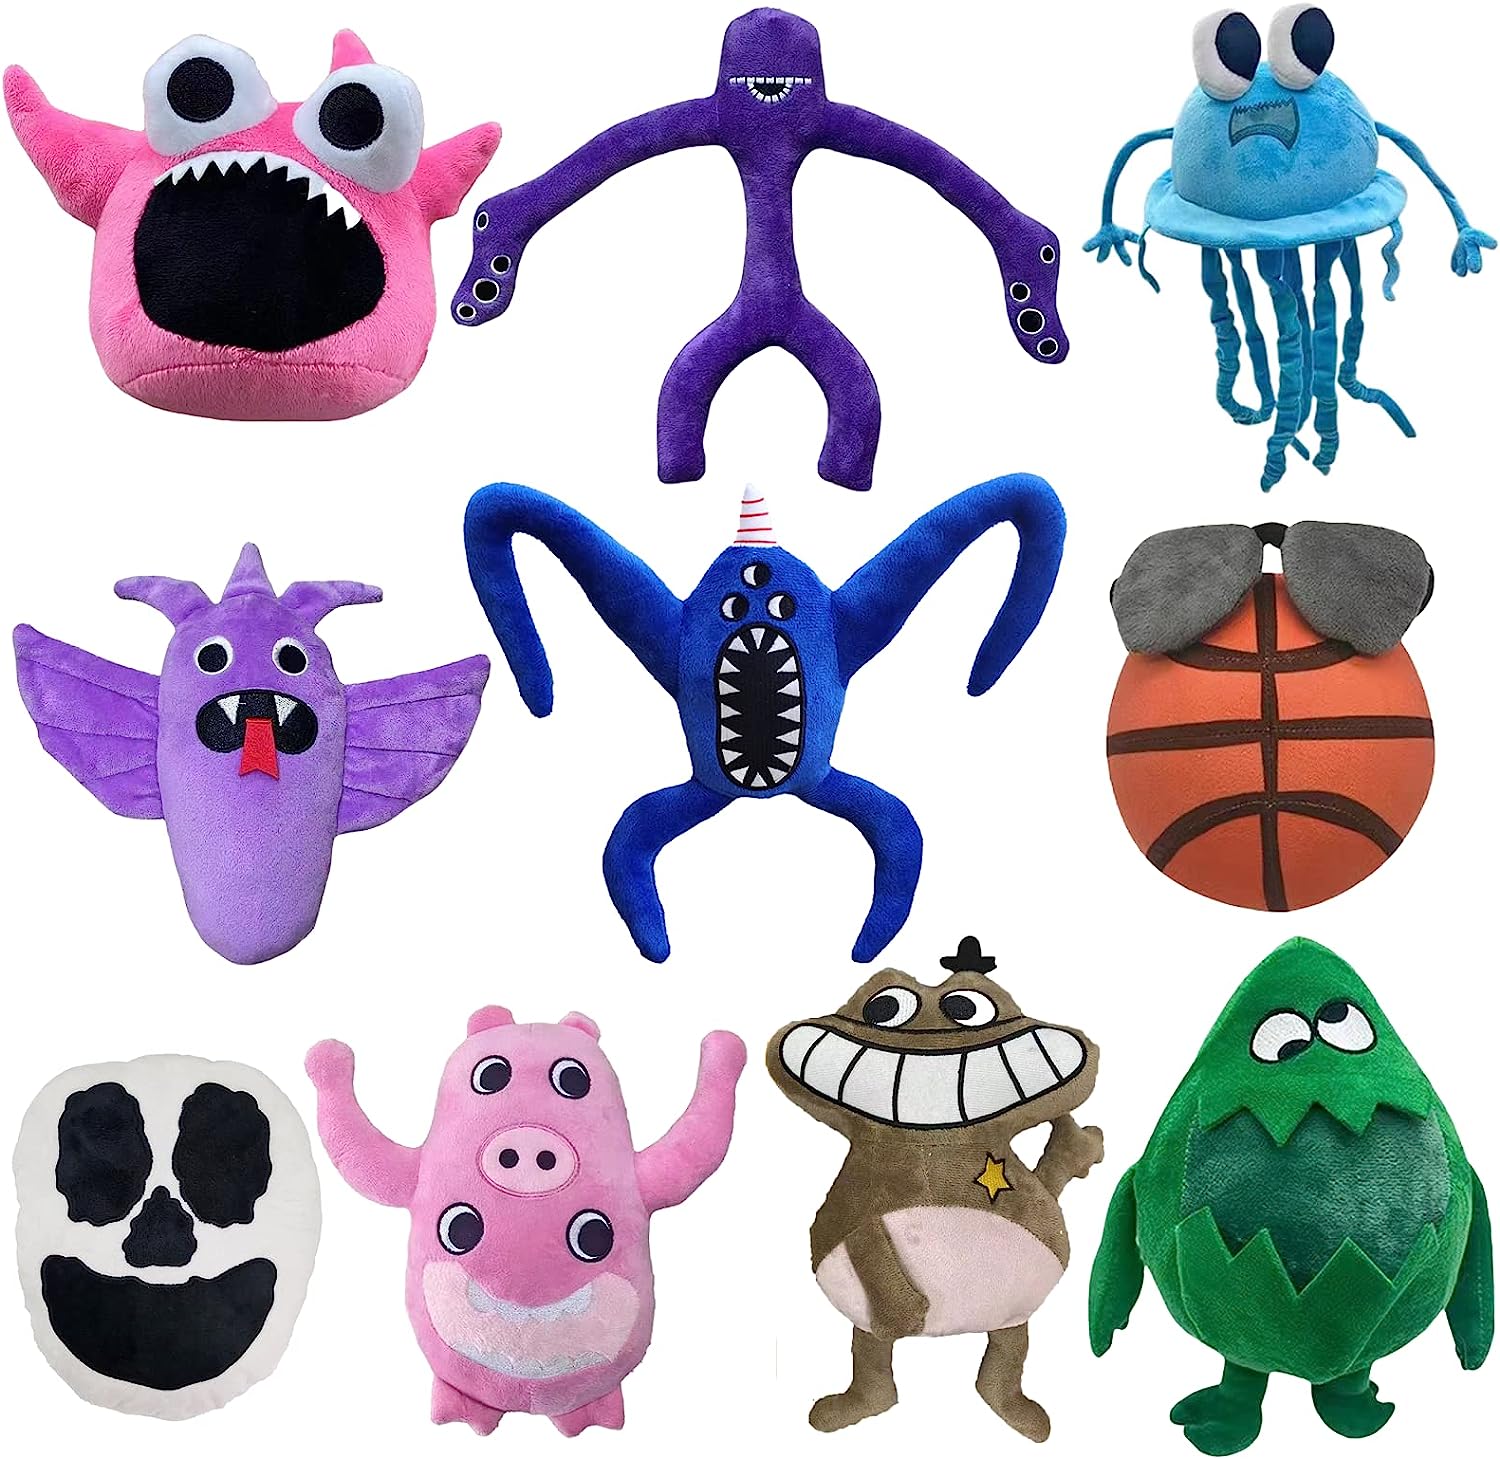 Ban-ban Plush, Nabnab, Jumbo Josh, Opila Bird Plushies, Monster Horror  Stuffed Figure Doll, Gift for Fans (ZI) 